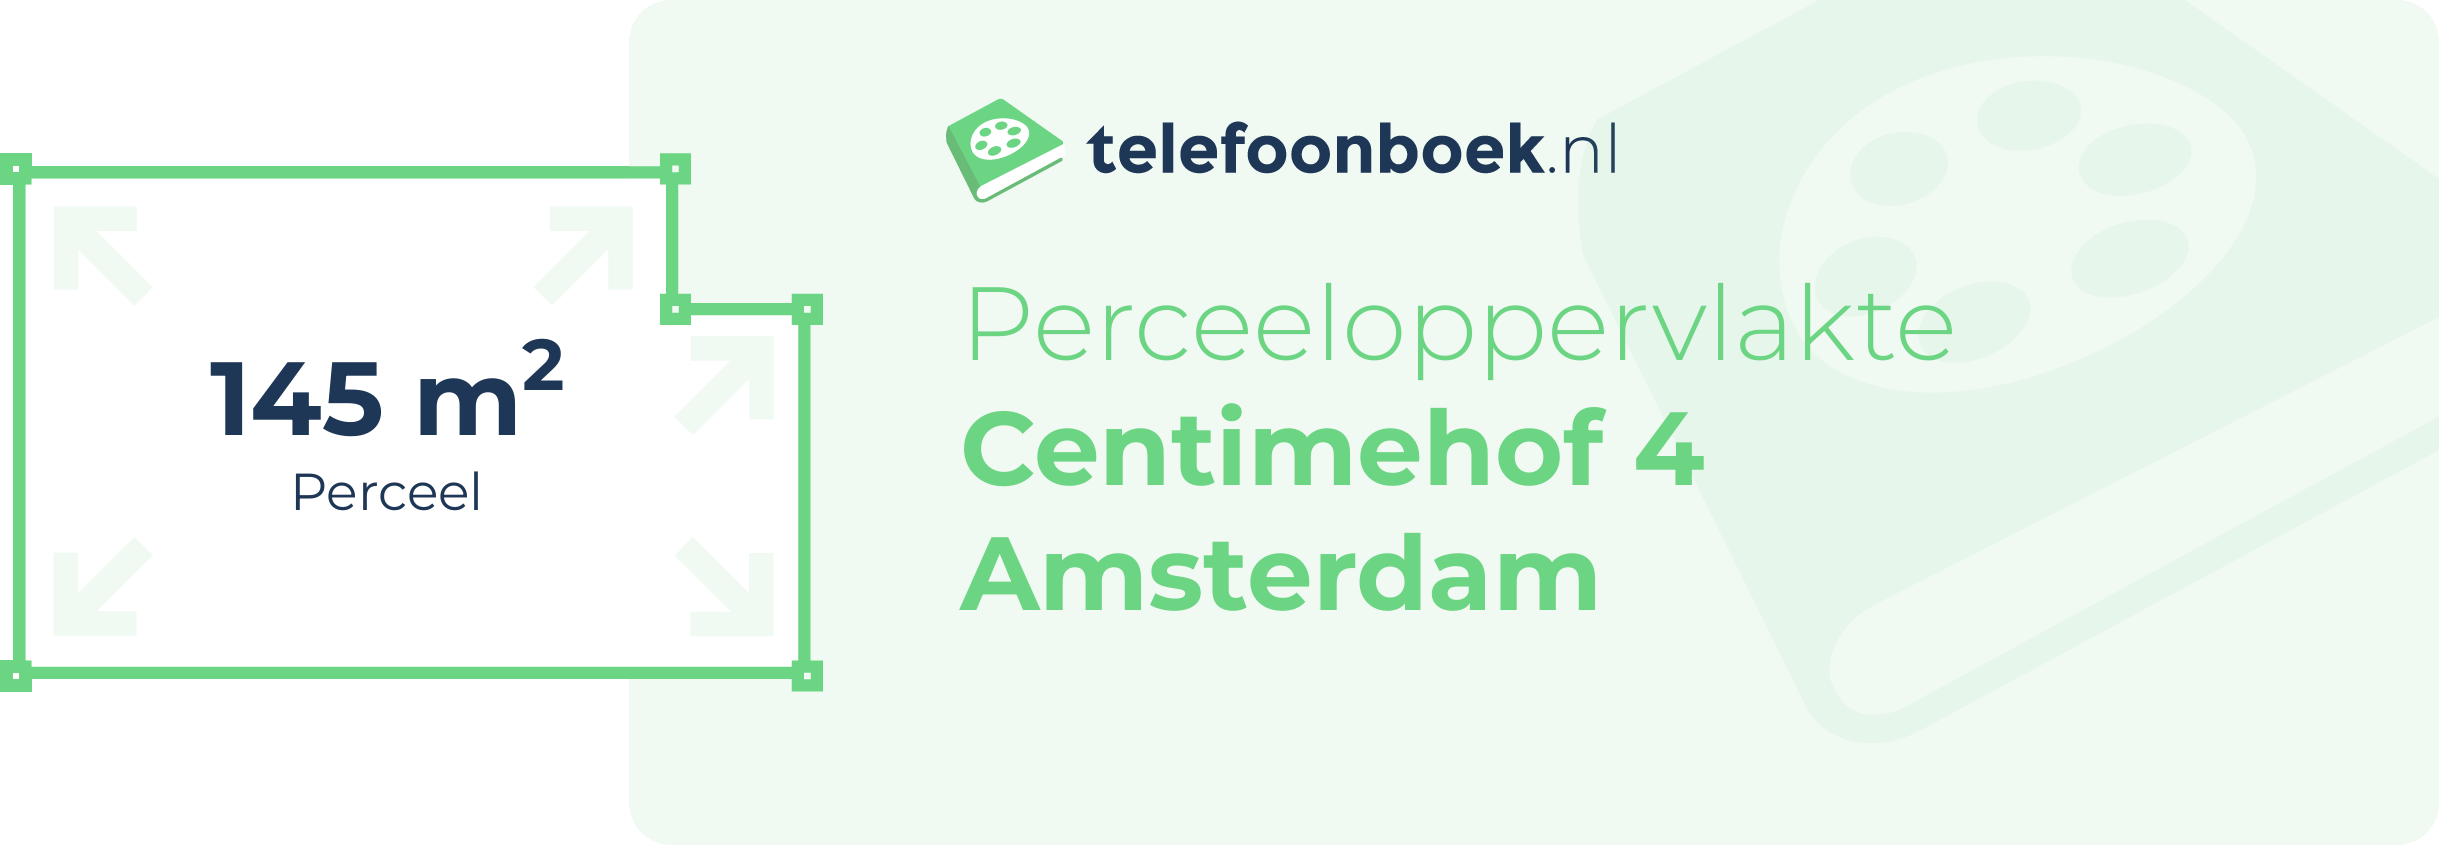 Perceeloppervlakte Centimehof 4 Amsterdam